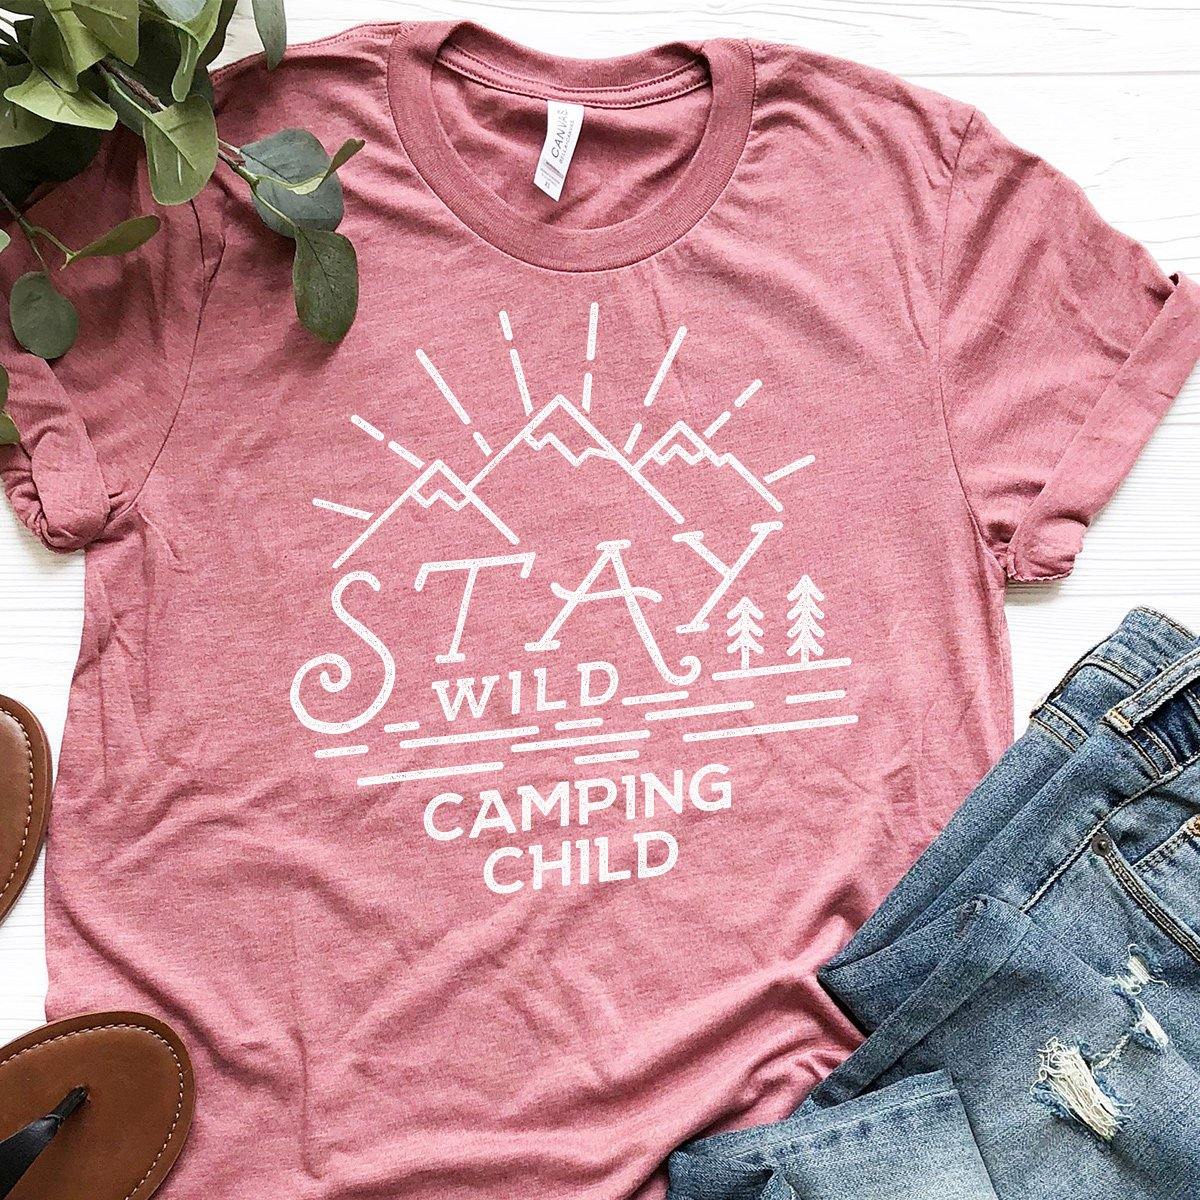 Stay Wild Camping Child Shirt,Camping Shirt,Hiking Shirt,Mountain Shirt,Climbing Shirt - Fastdeliverytees.com